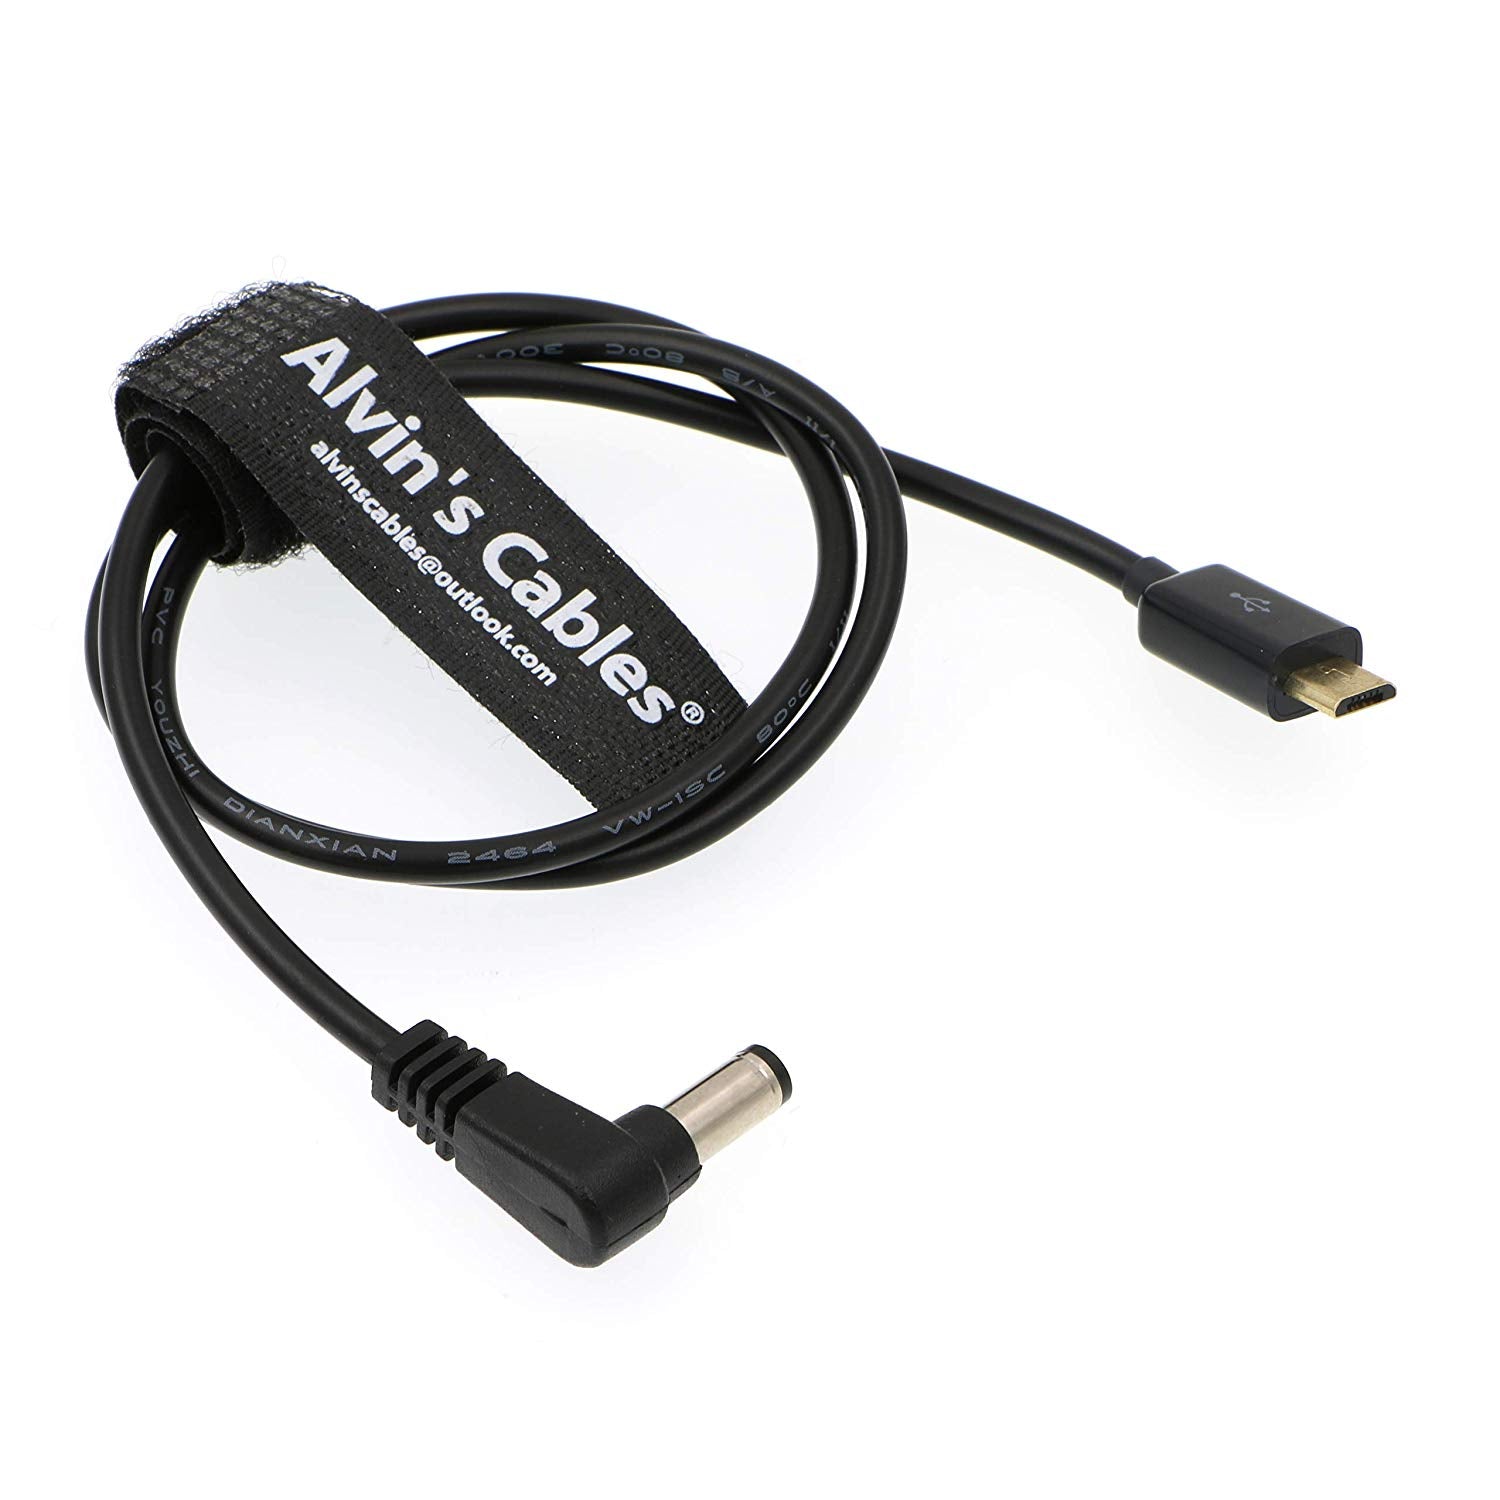 Alvin's Cables Micro USB to 2.1 DC Barrel Motor Power Cable for Tilta Nucleus Nano